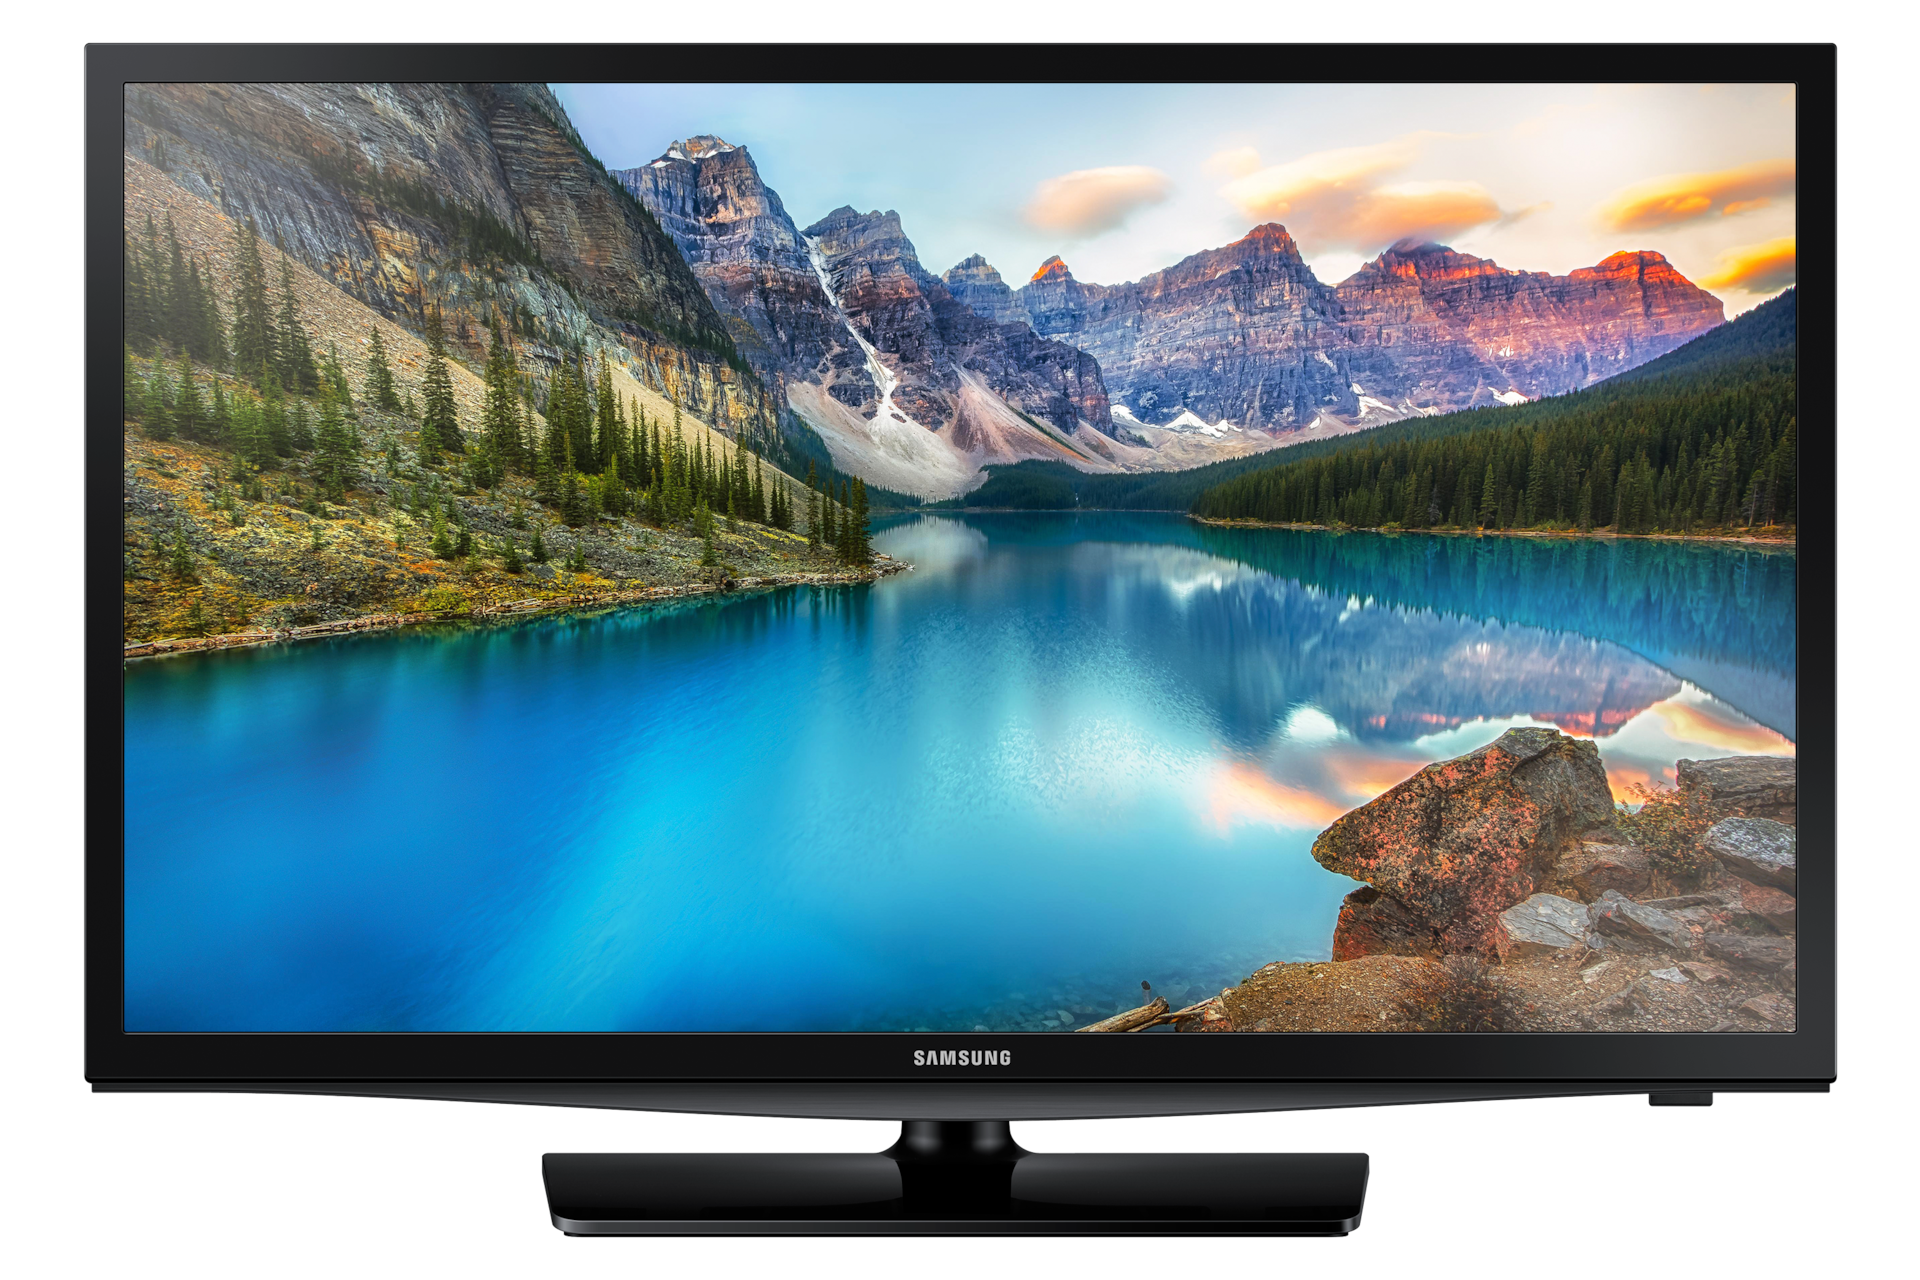 32 Full HD LED TV  Soporte Samsung Latinoamérica